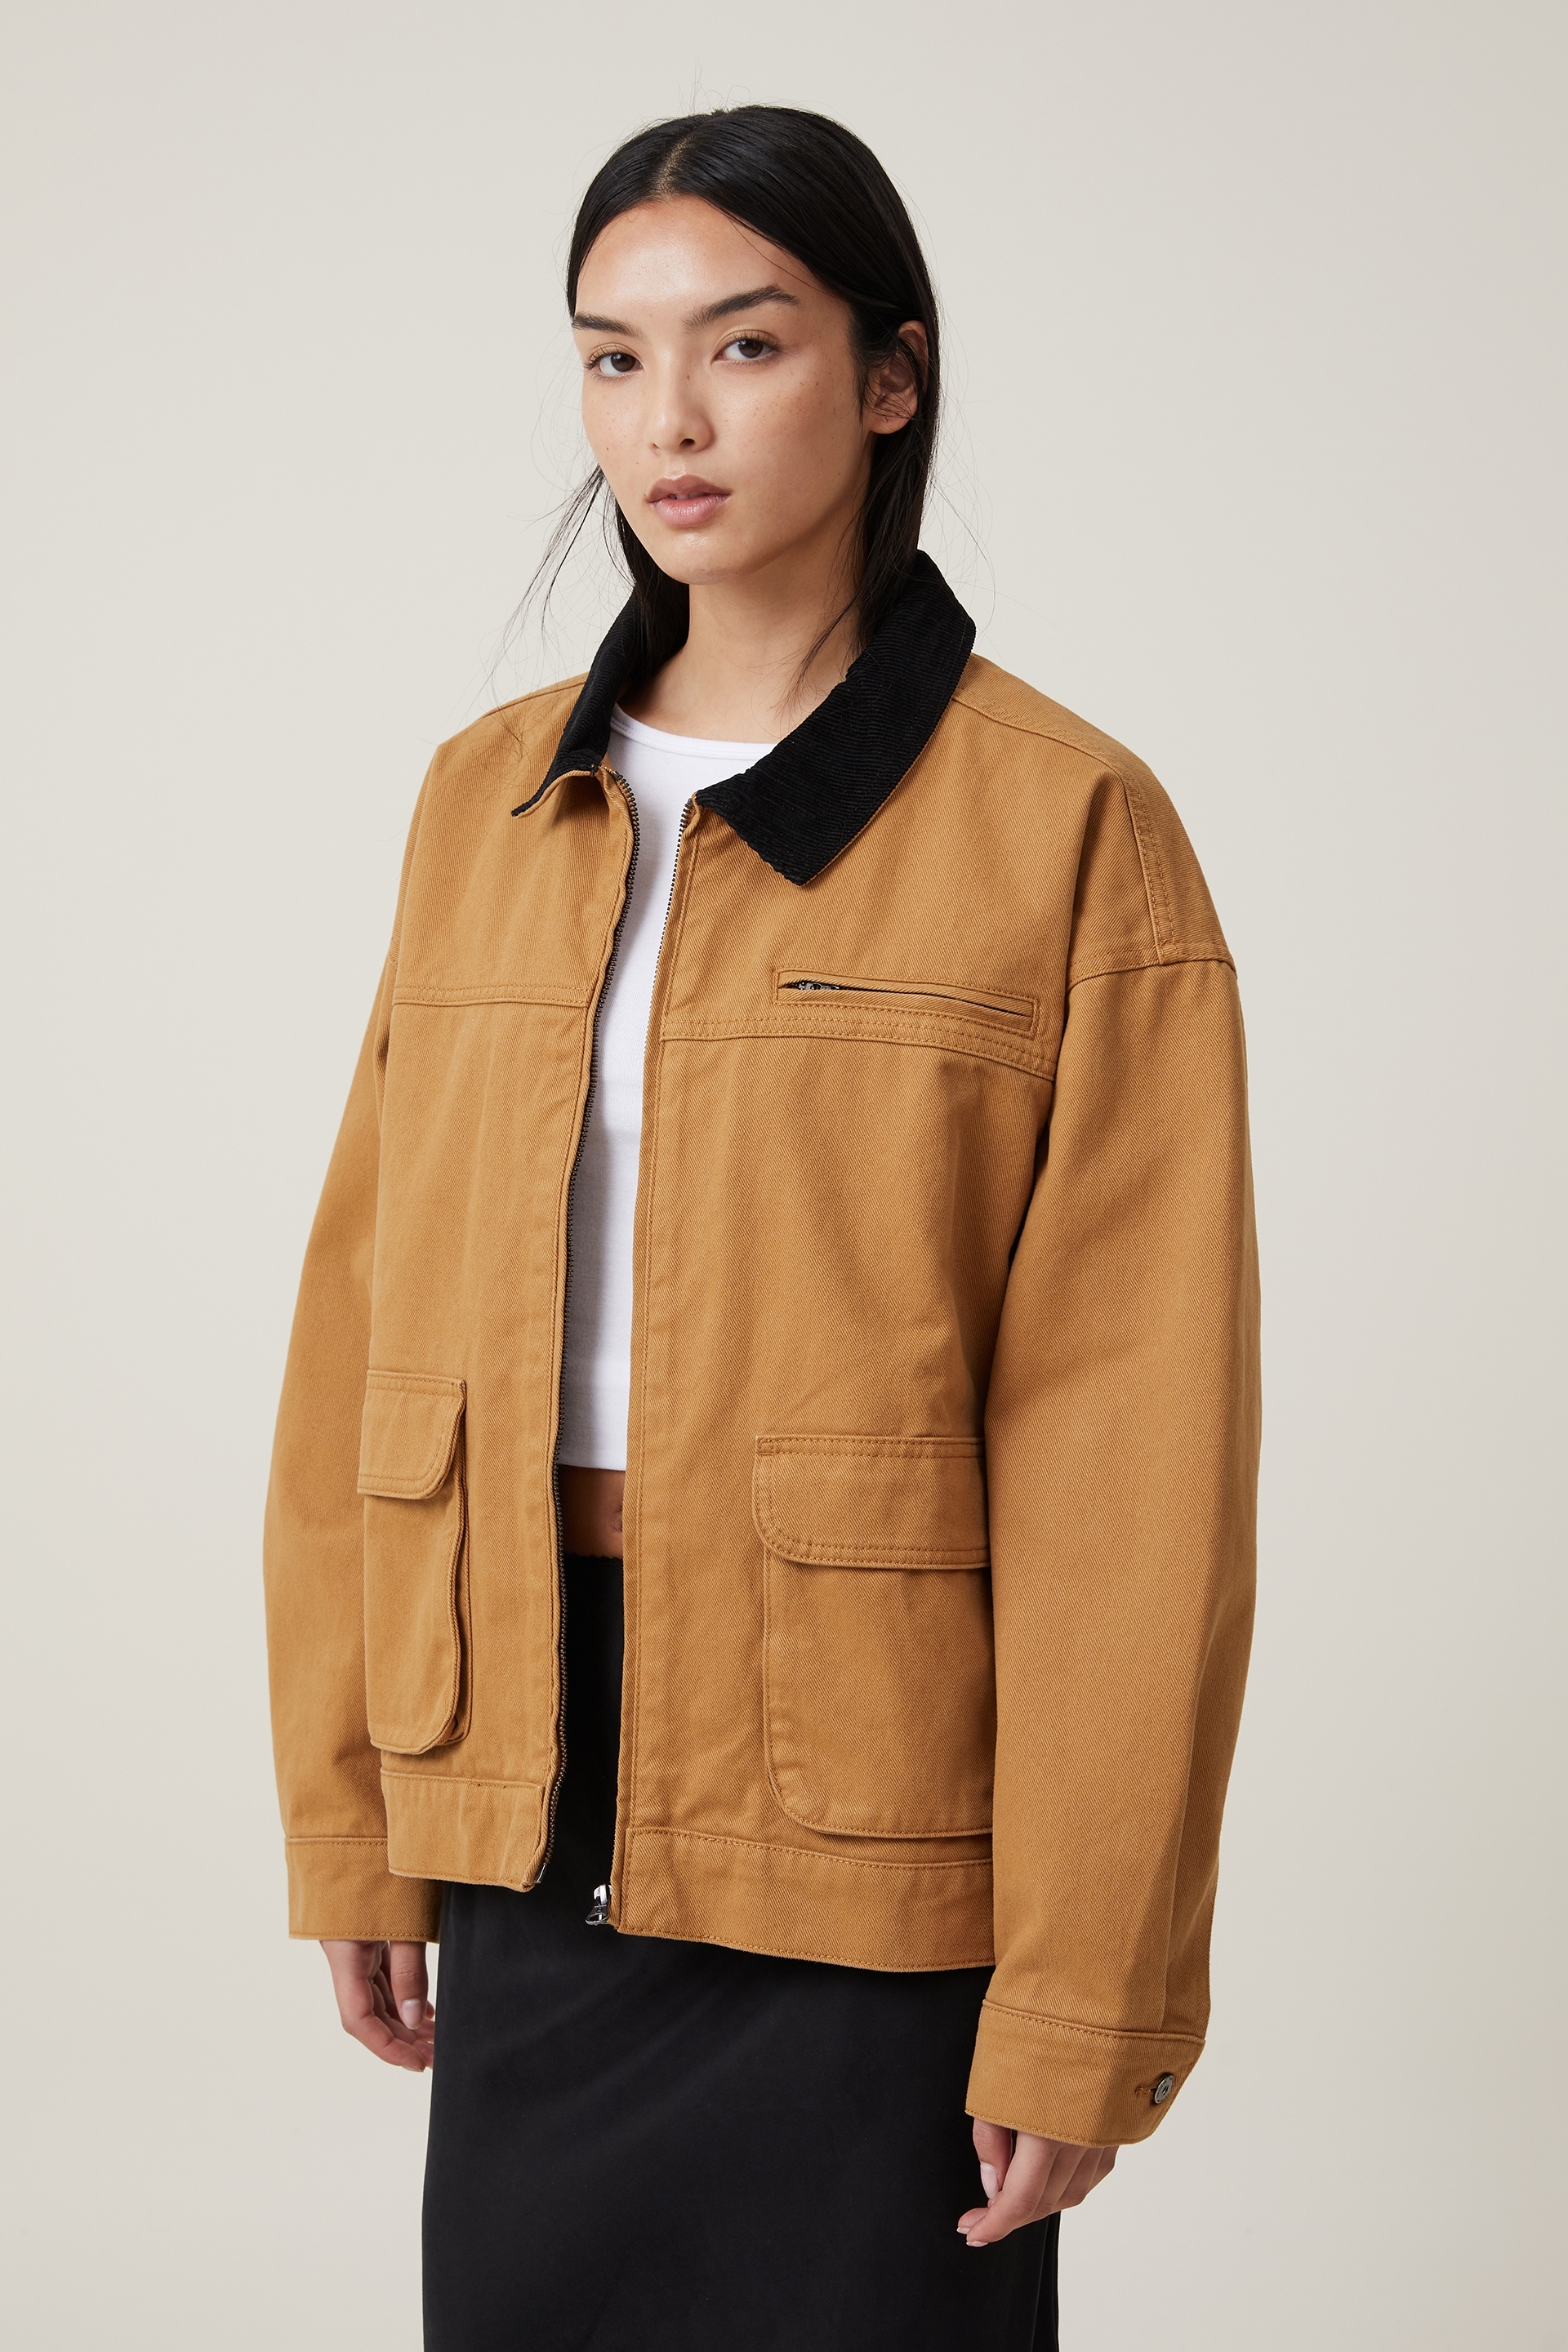 Cotton On Women - Workwear Jacket - Tan